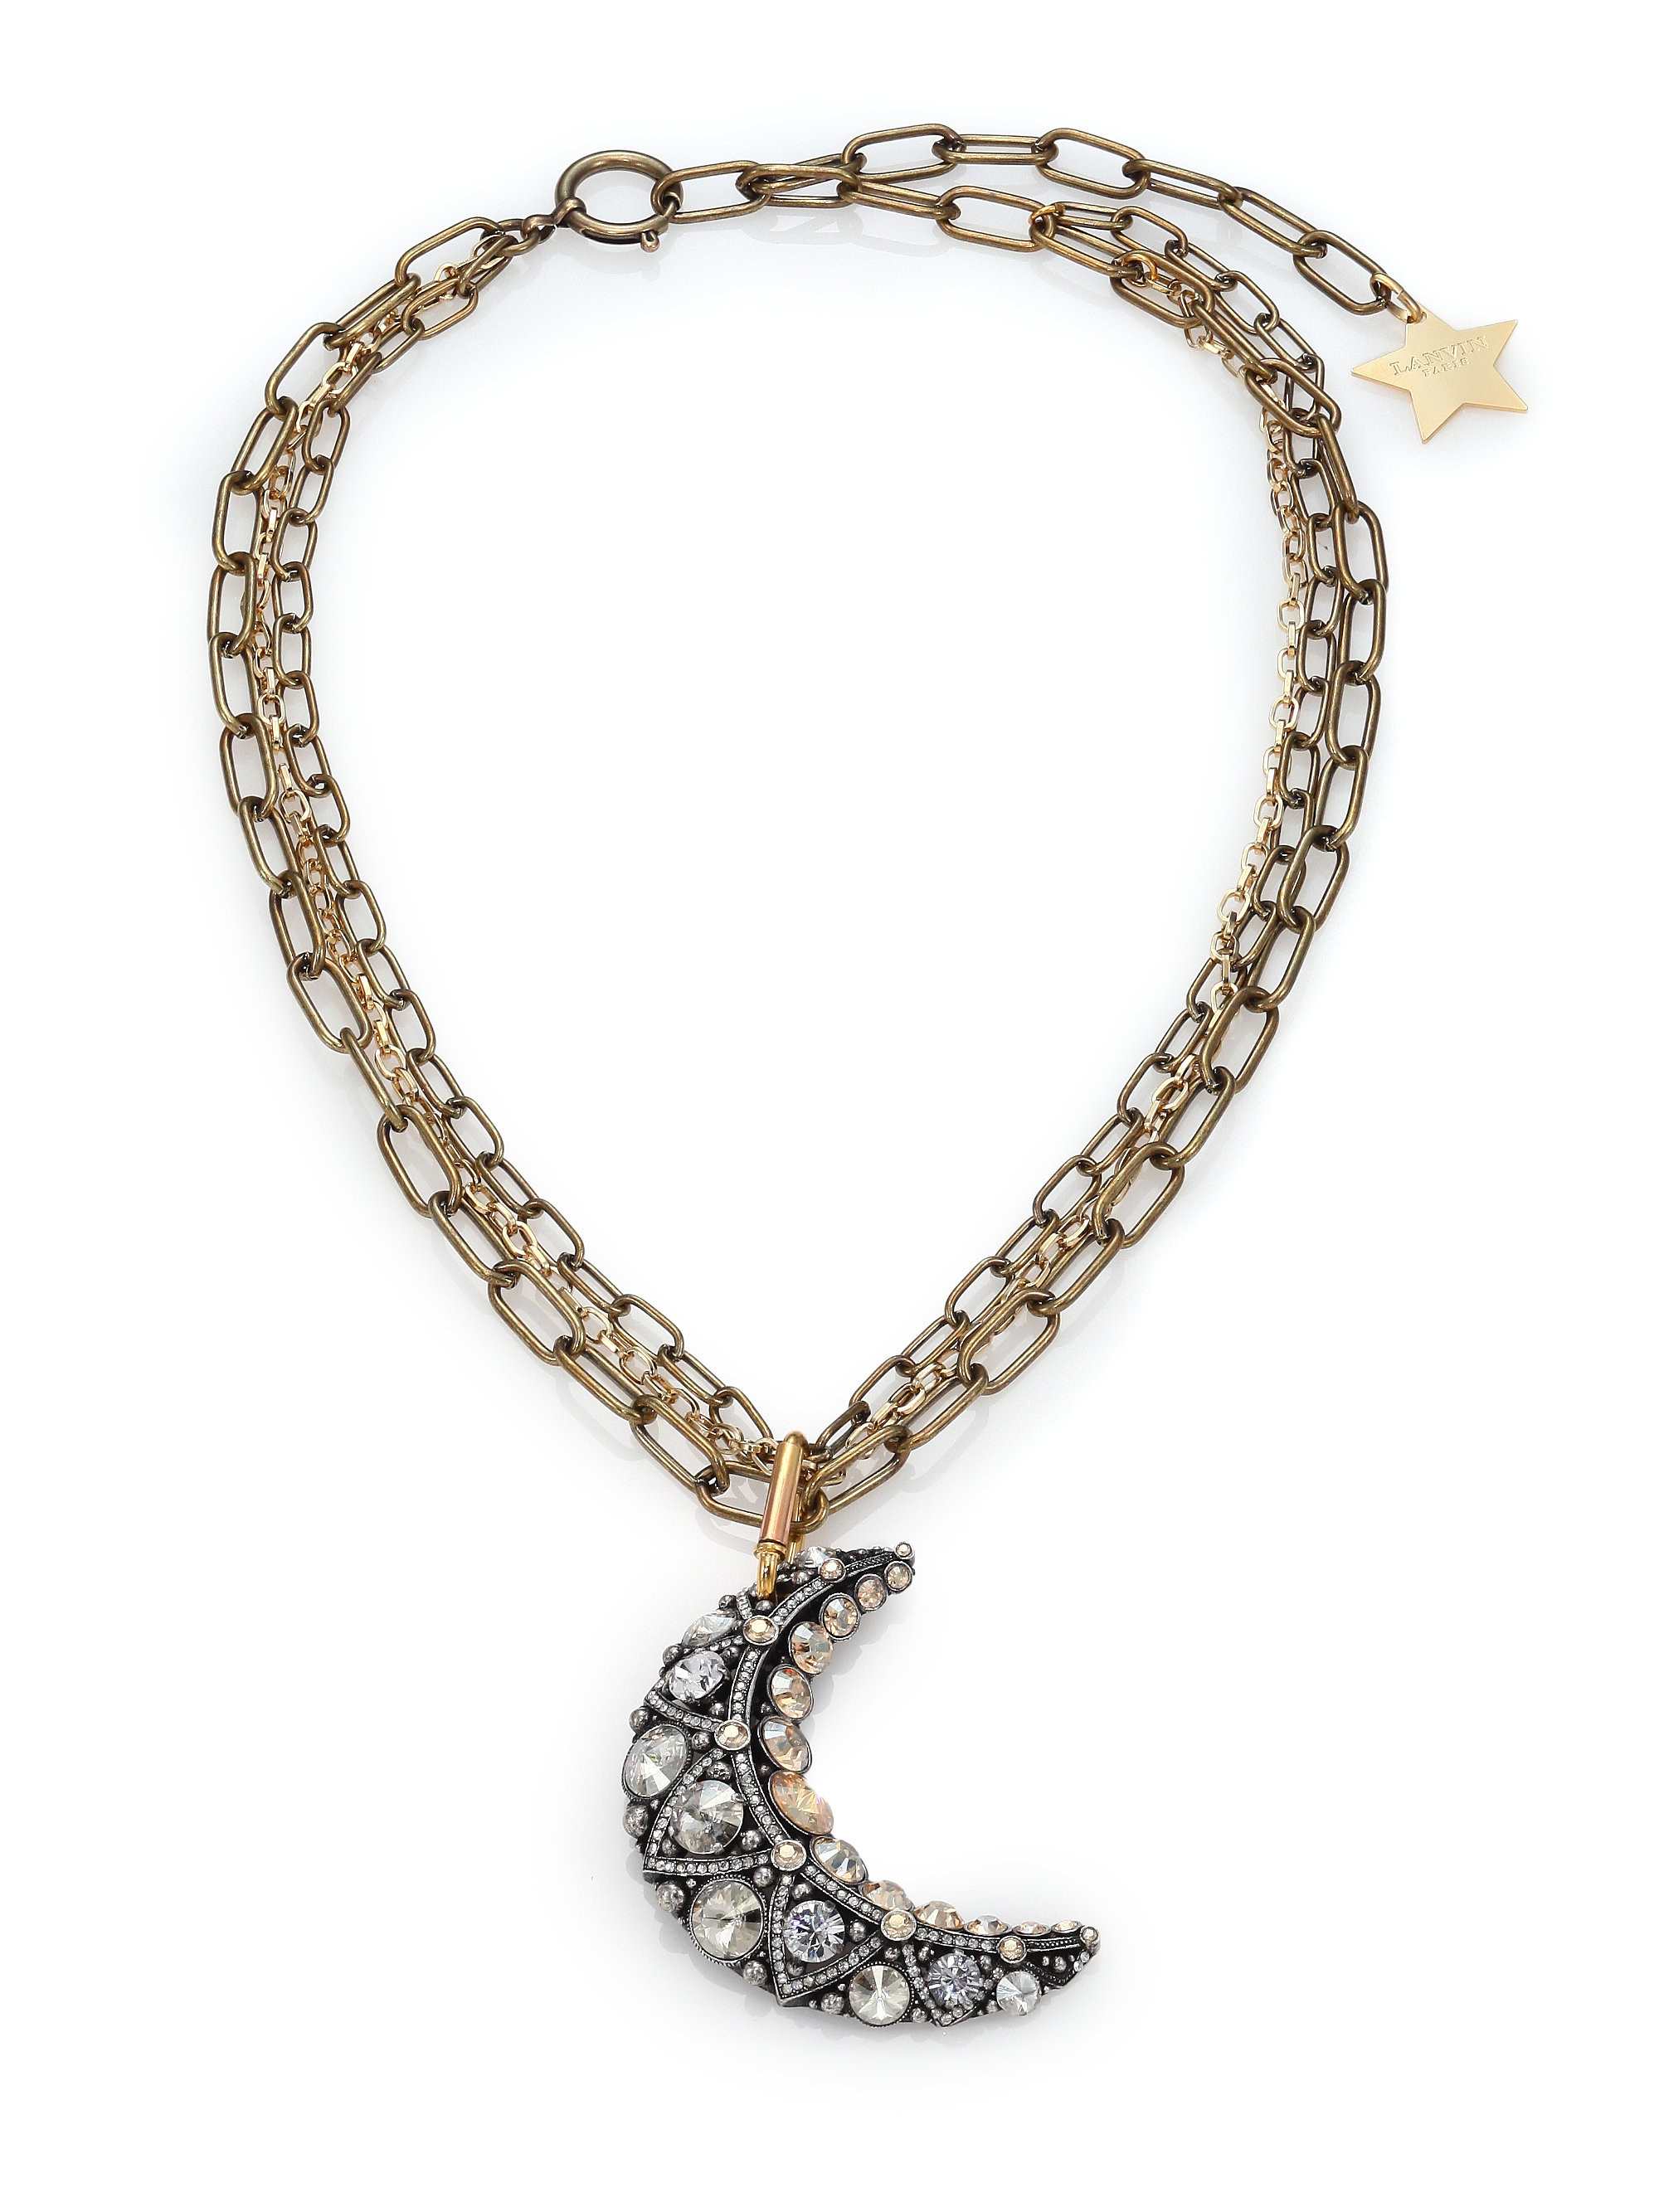 Lyst - Lanvin Crystal Moon Long Pendant Necklace in Metallic